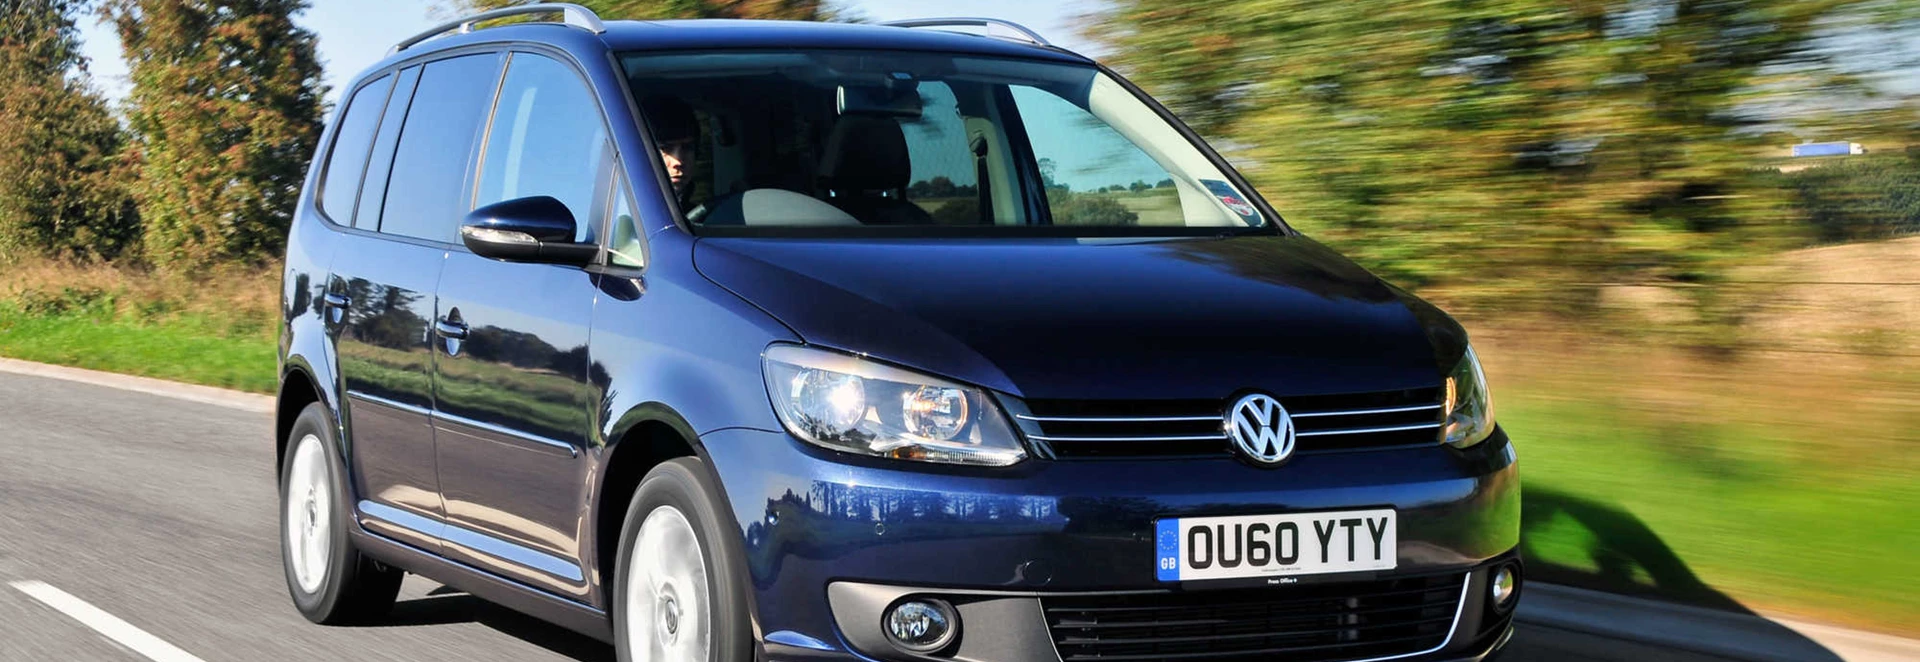 Volkswagen Touran MPV review 